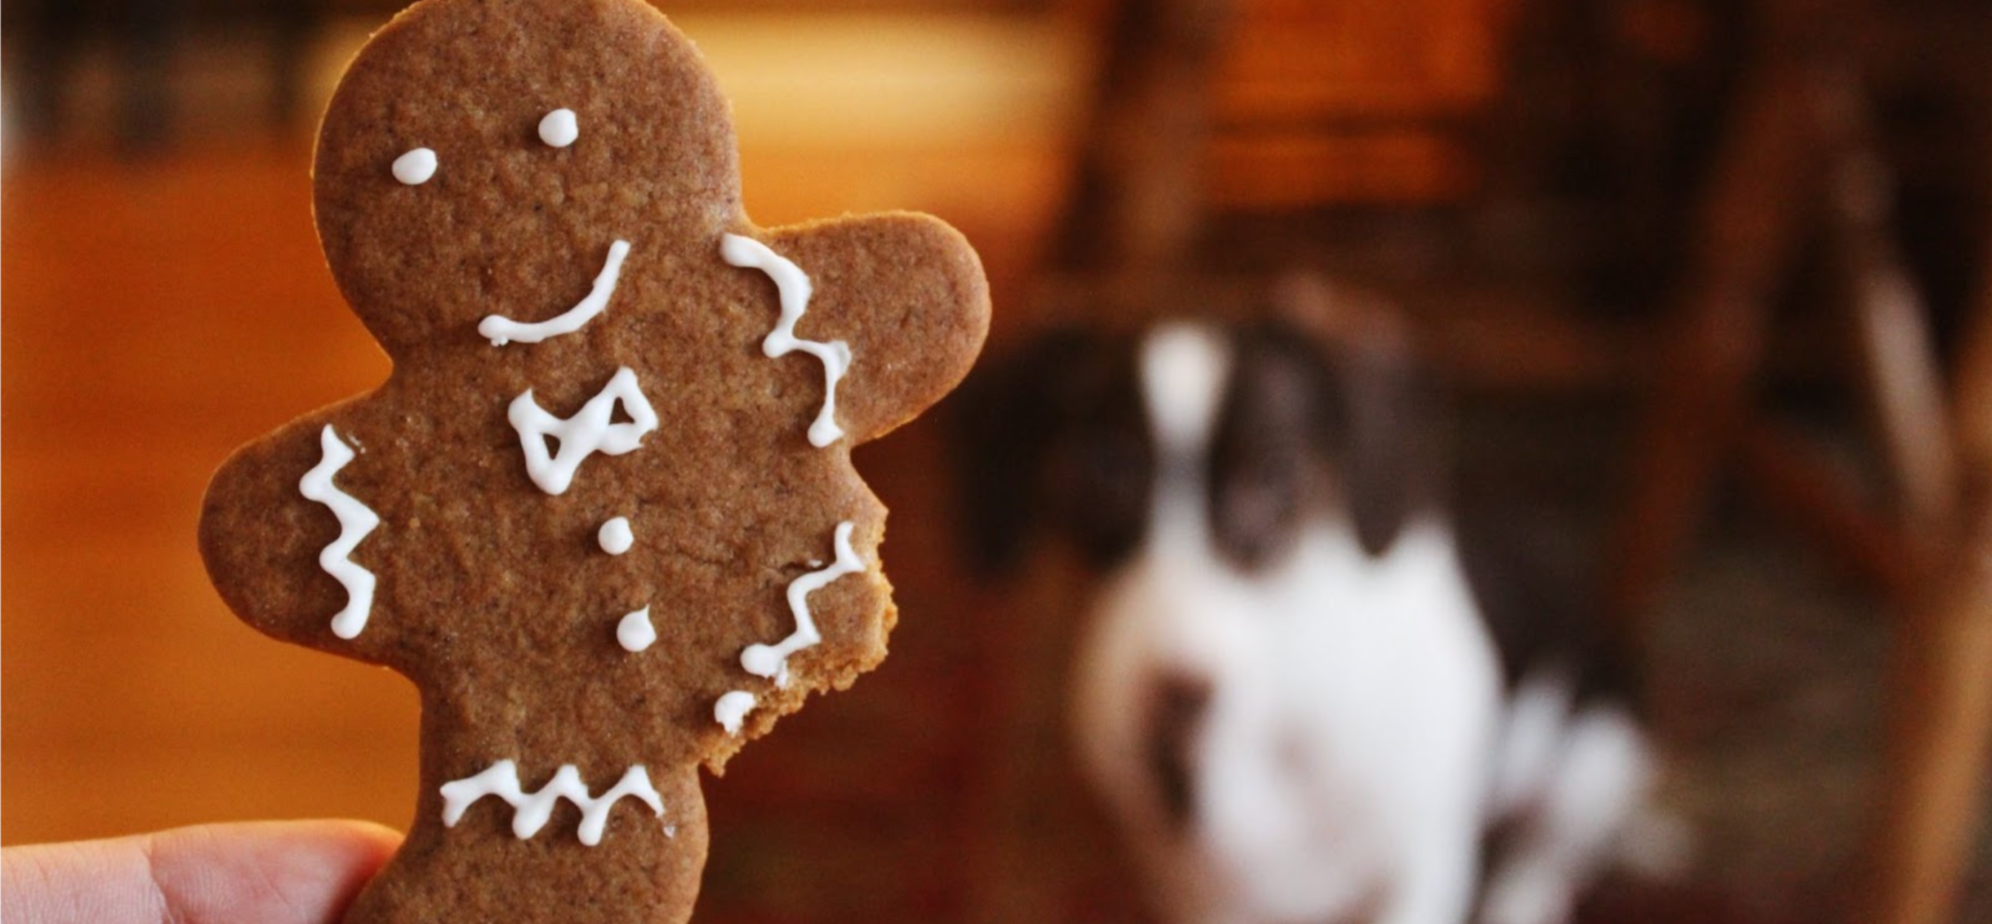 Half-eaten gingerbread man at Christmas